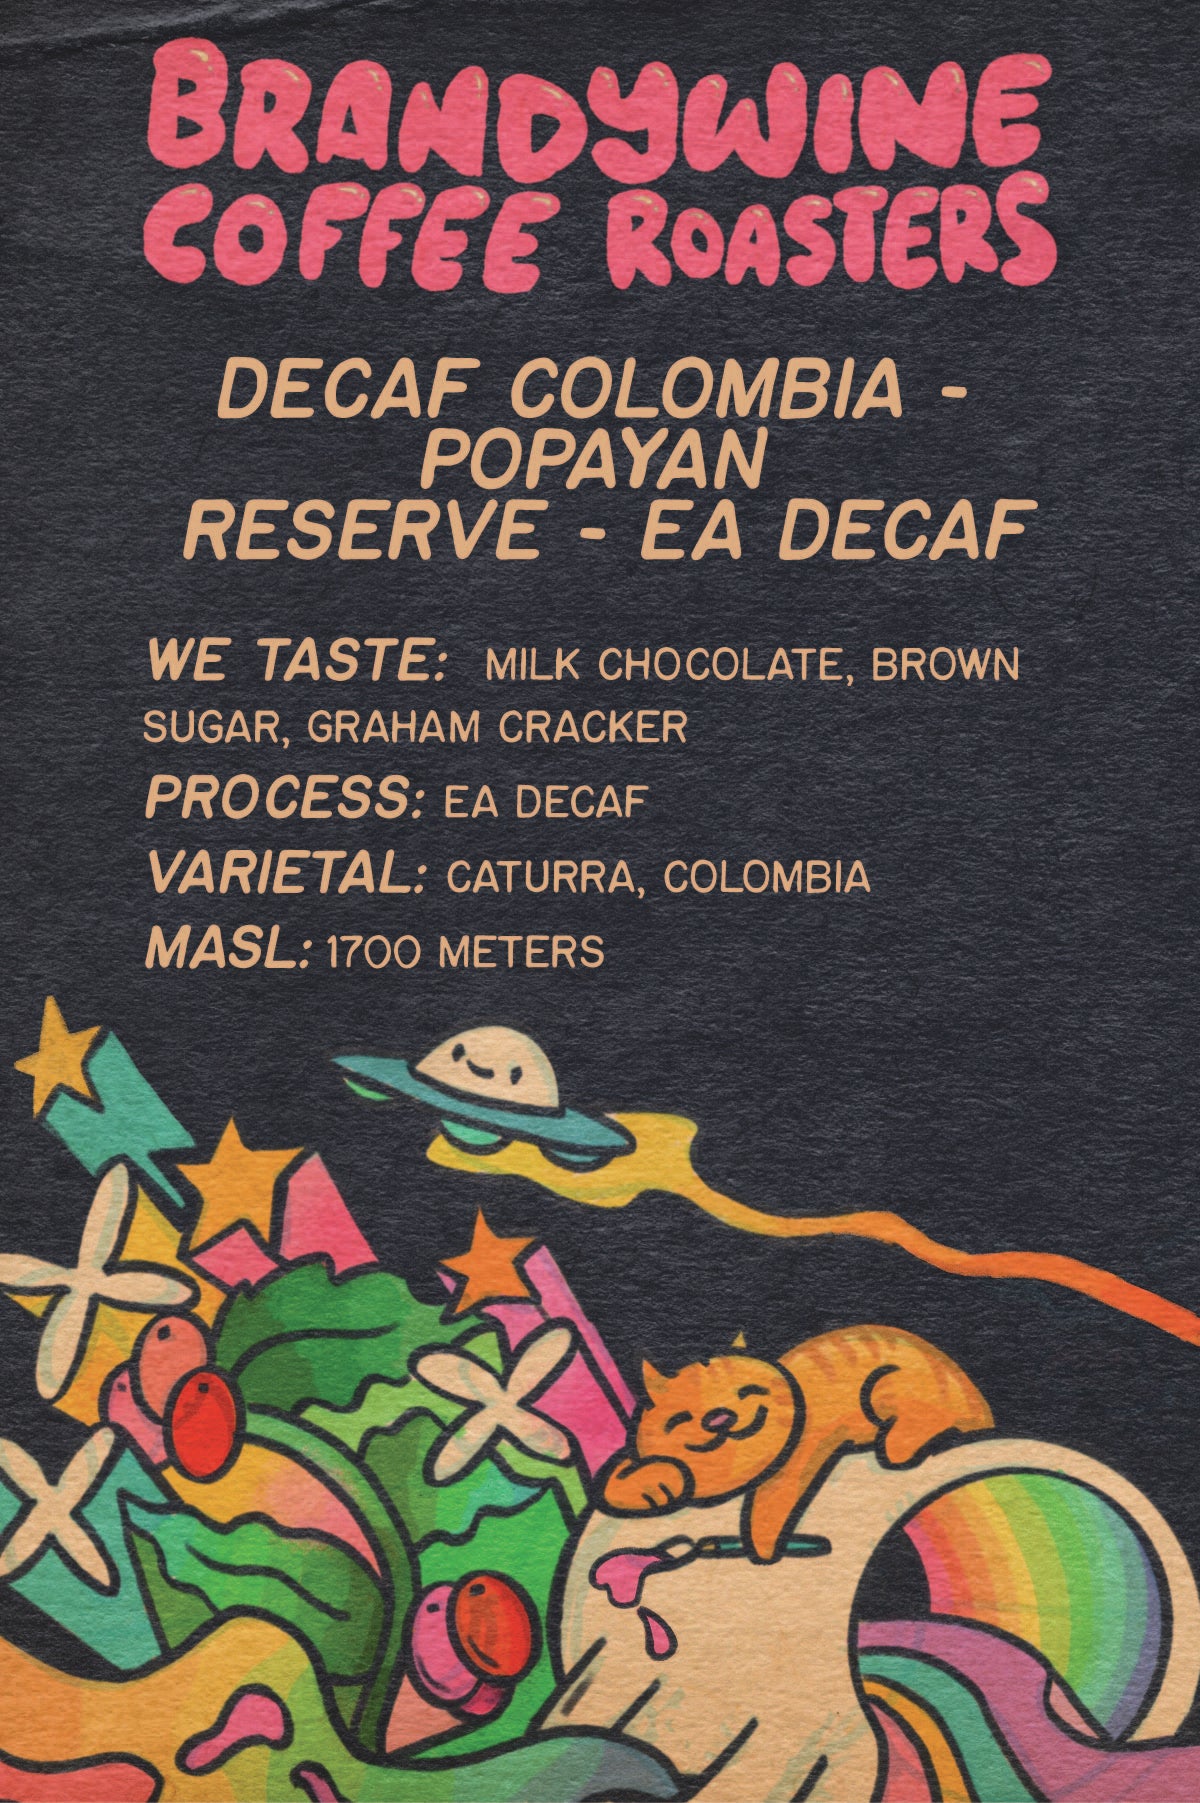 Colombia - Popayan Reserve - EA Decaf